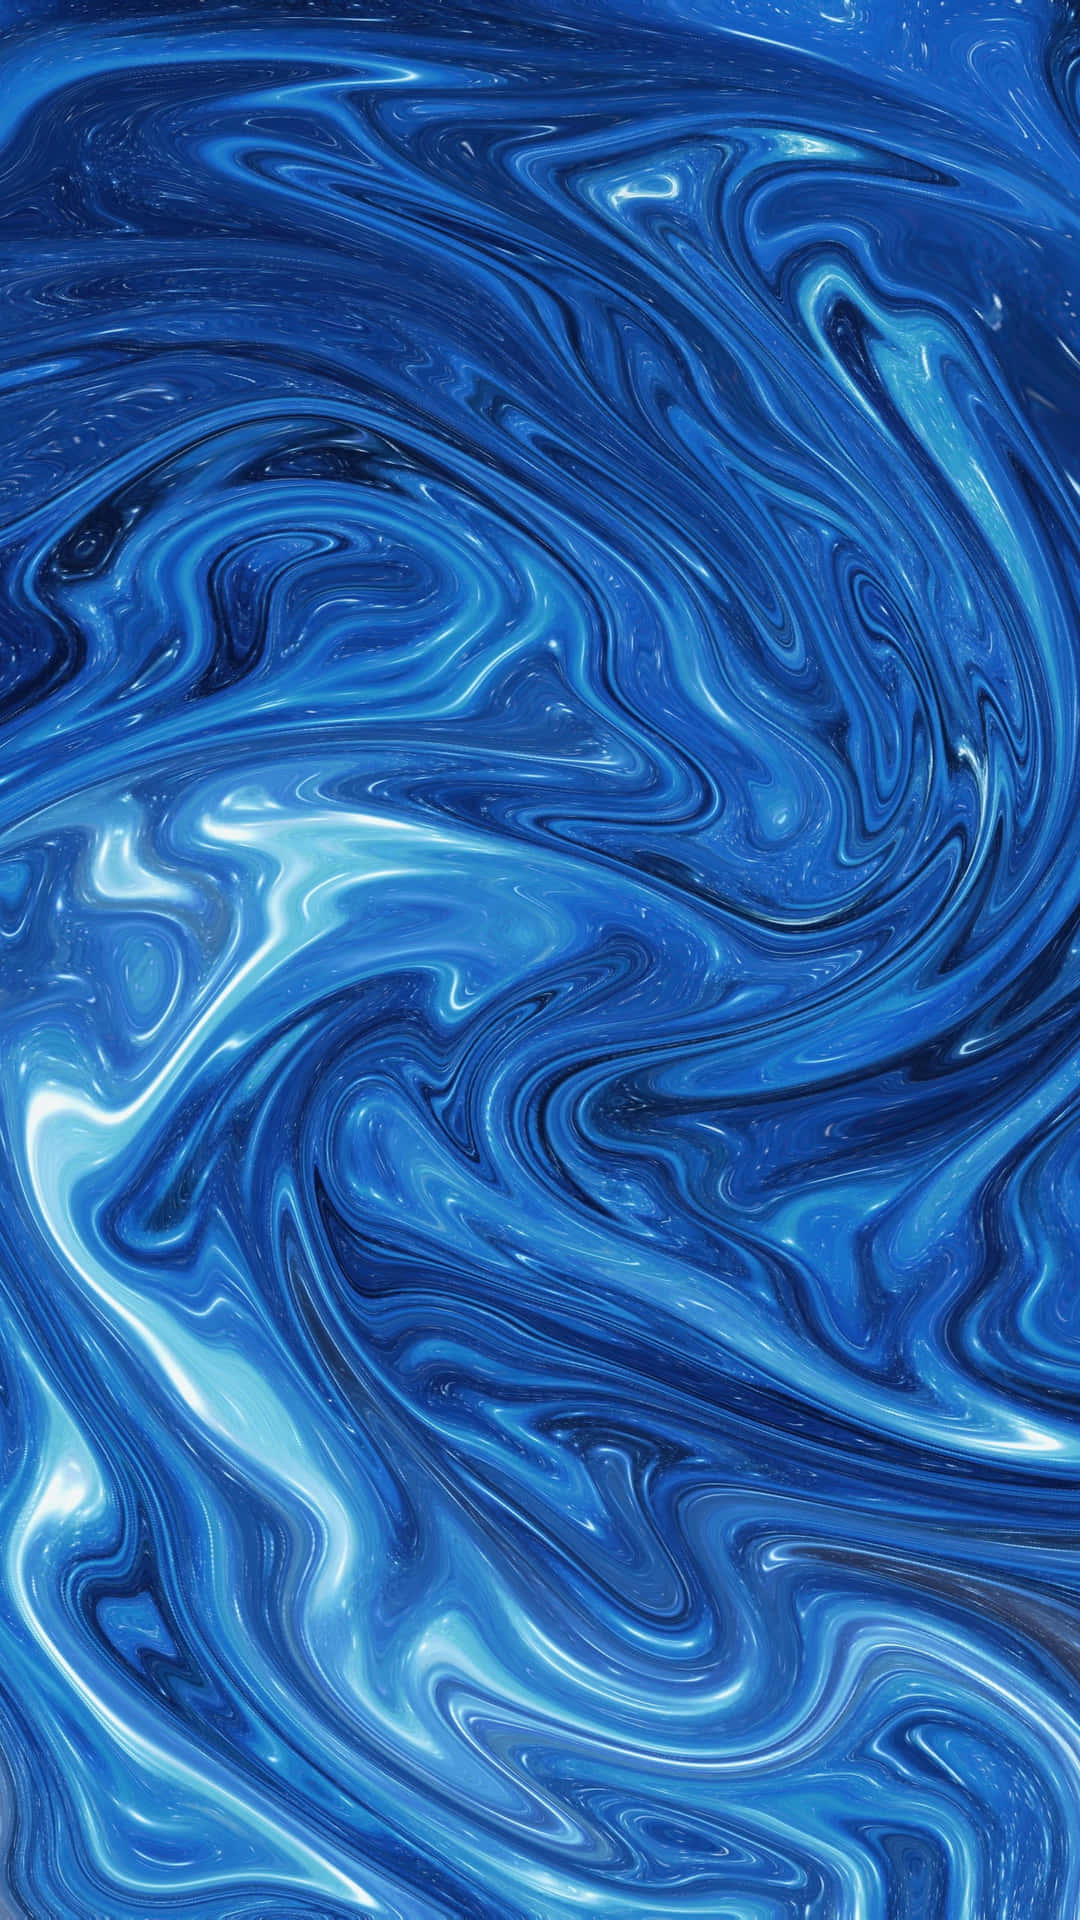 A Blue Liquid With Swirls And Swirls